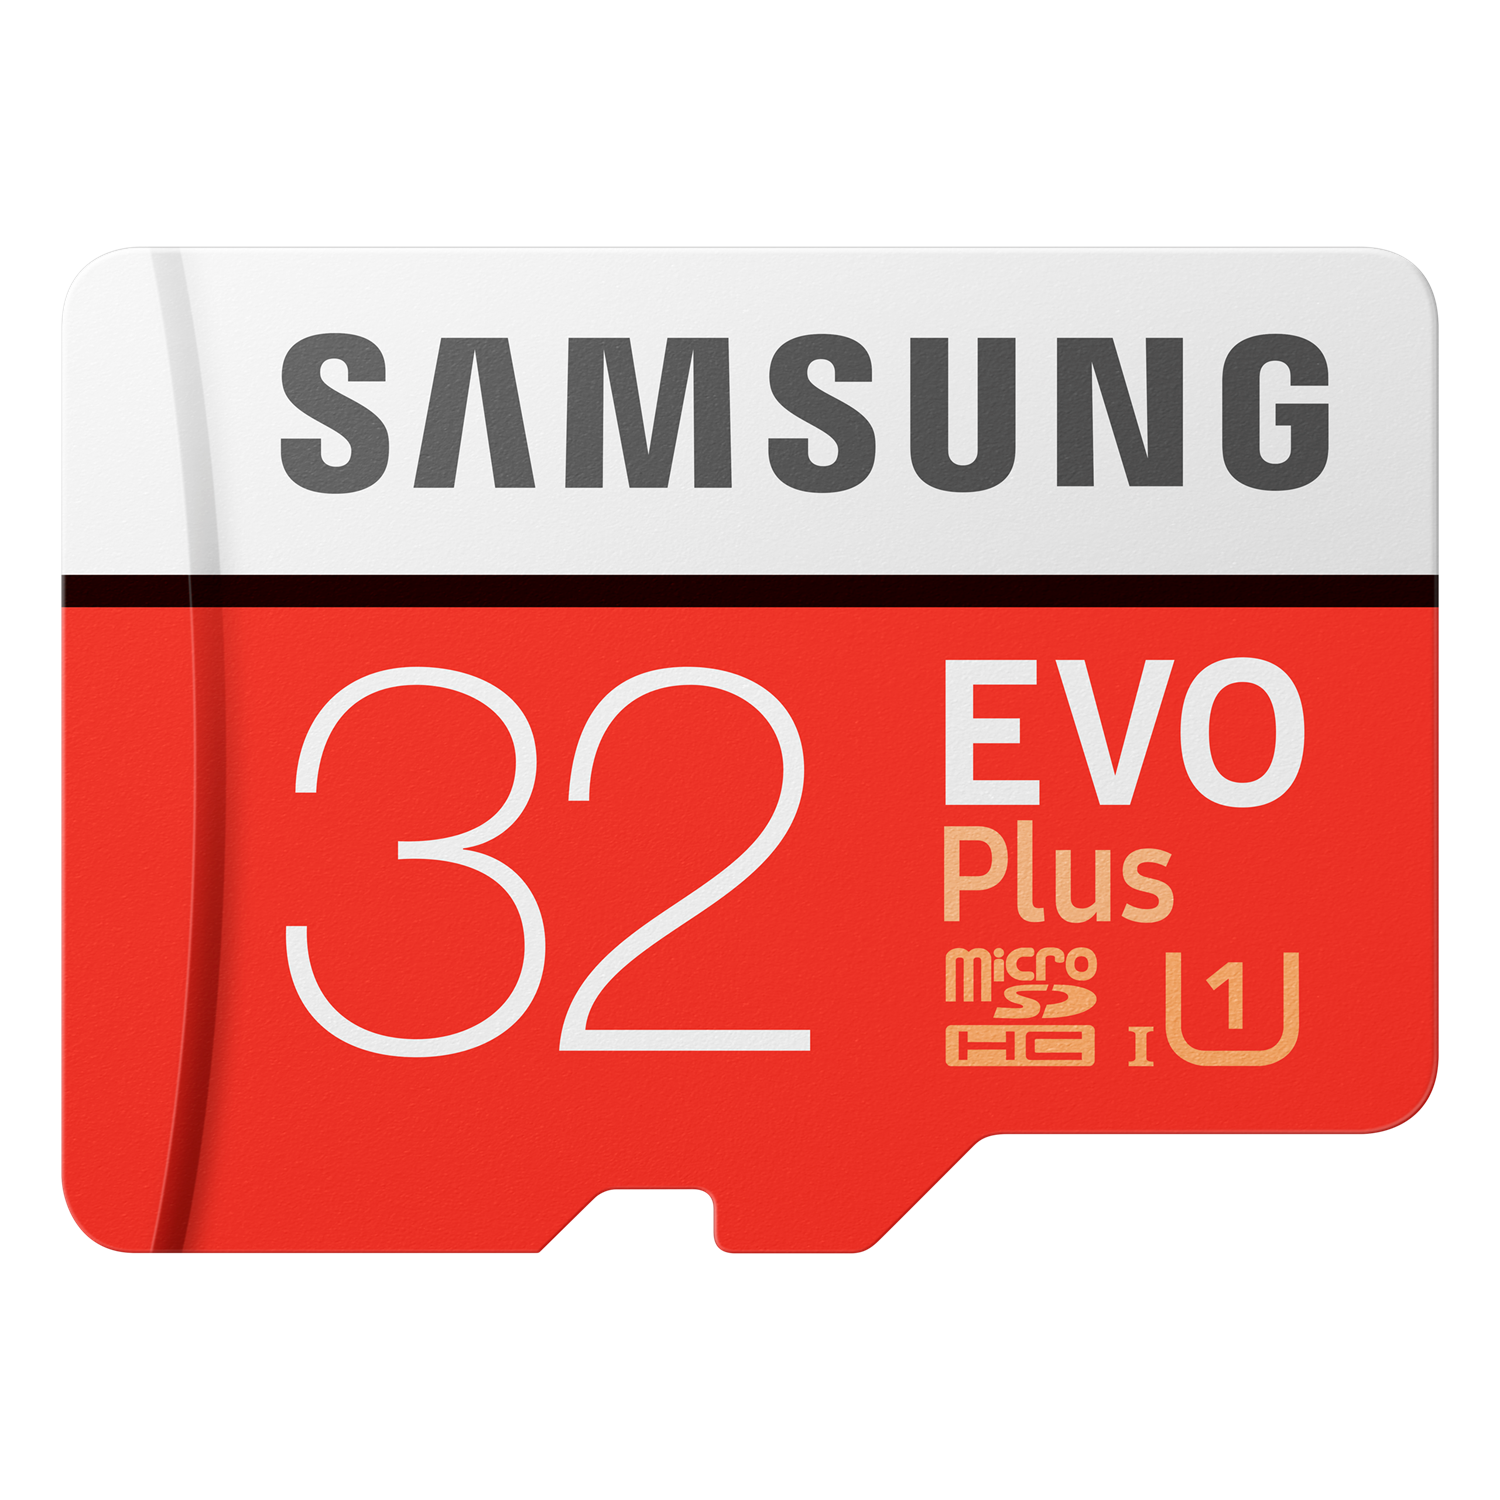 Geheugenkaart Evo Plus 32GB microSDHC Class 10 U1 microSHDC Universal